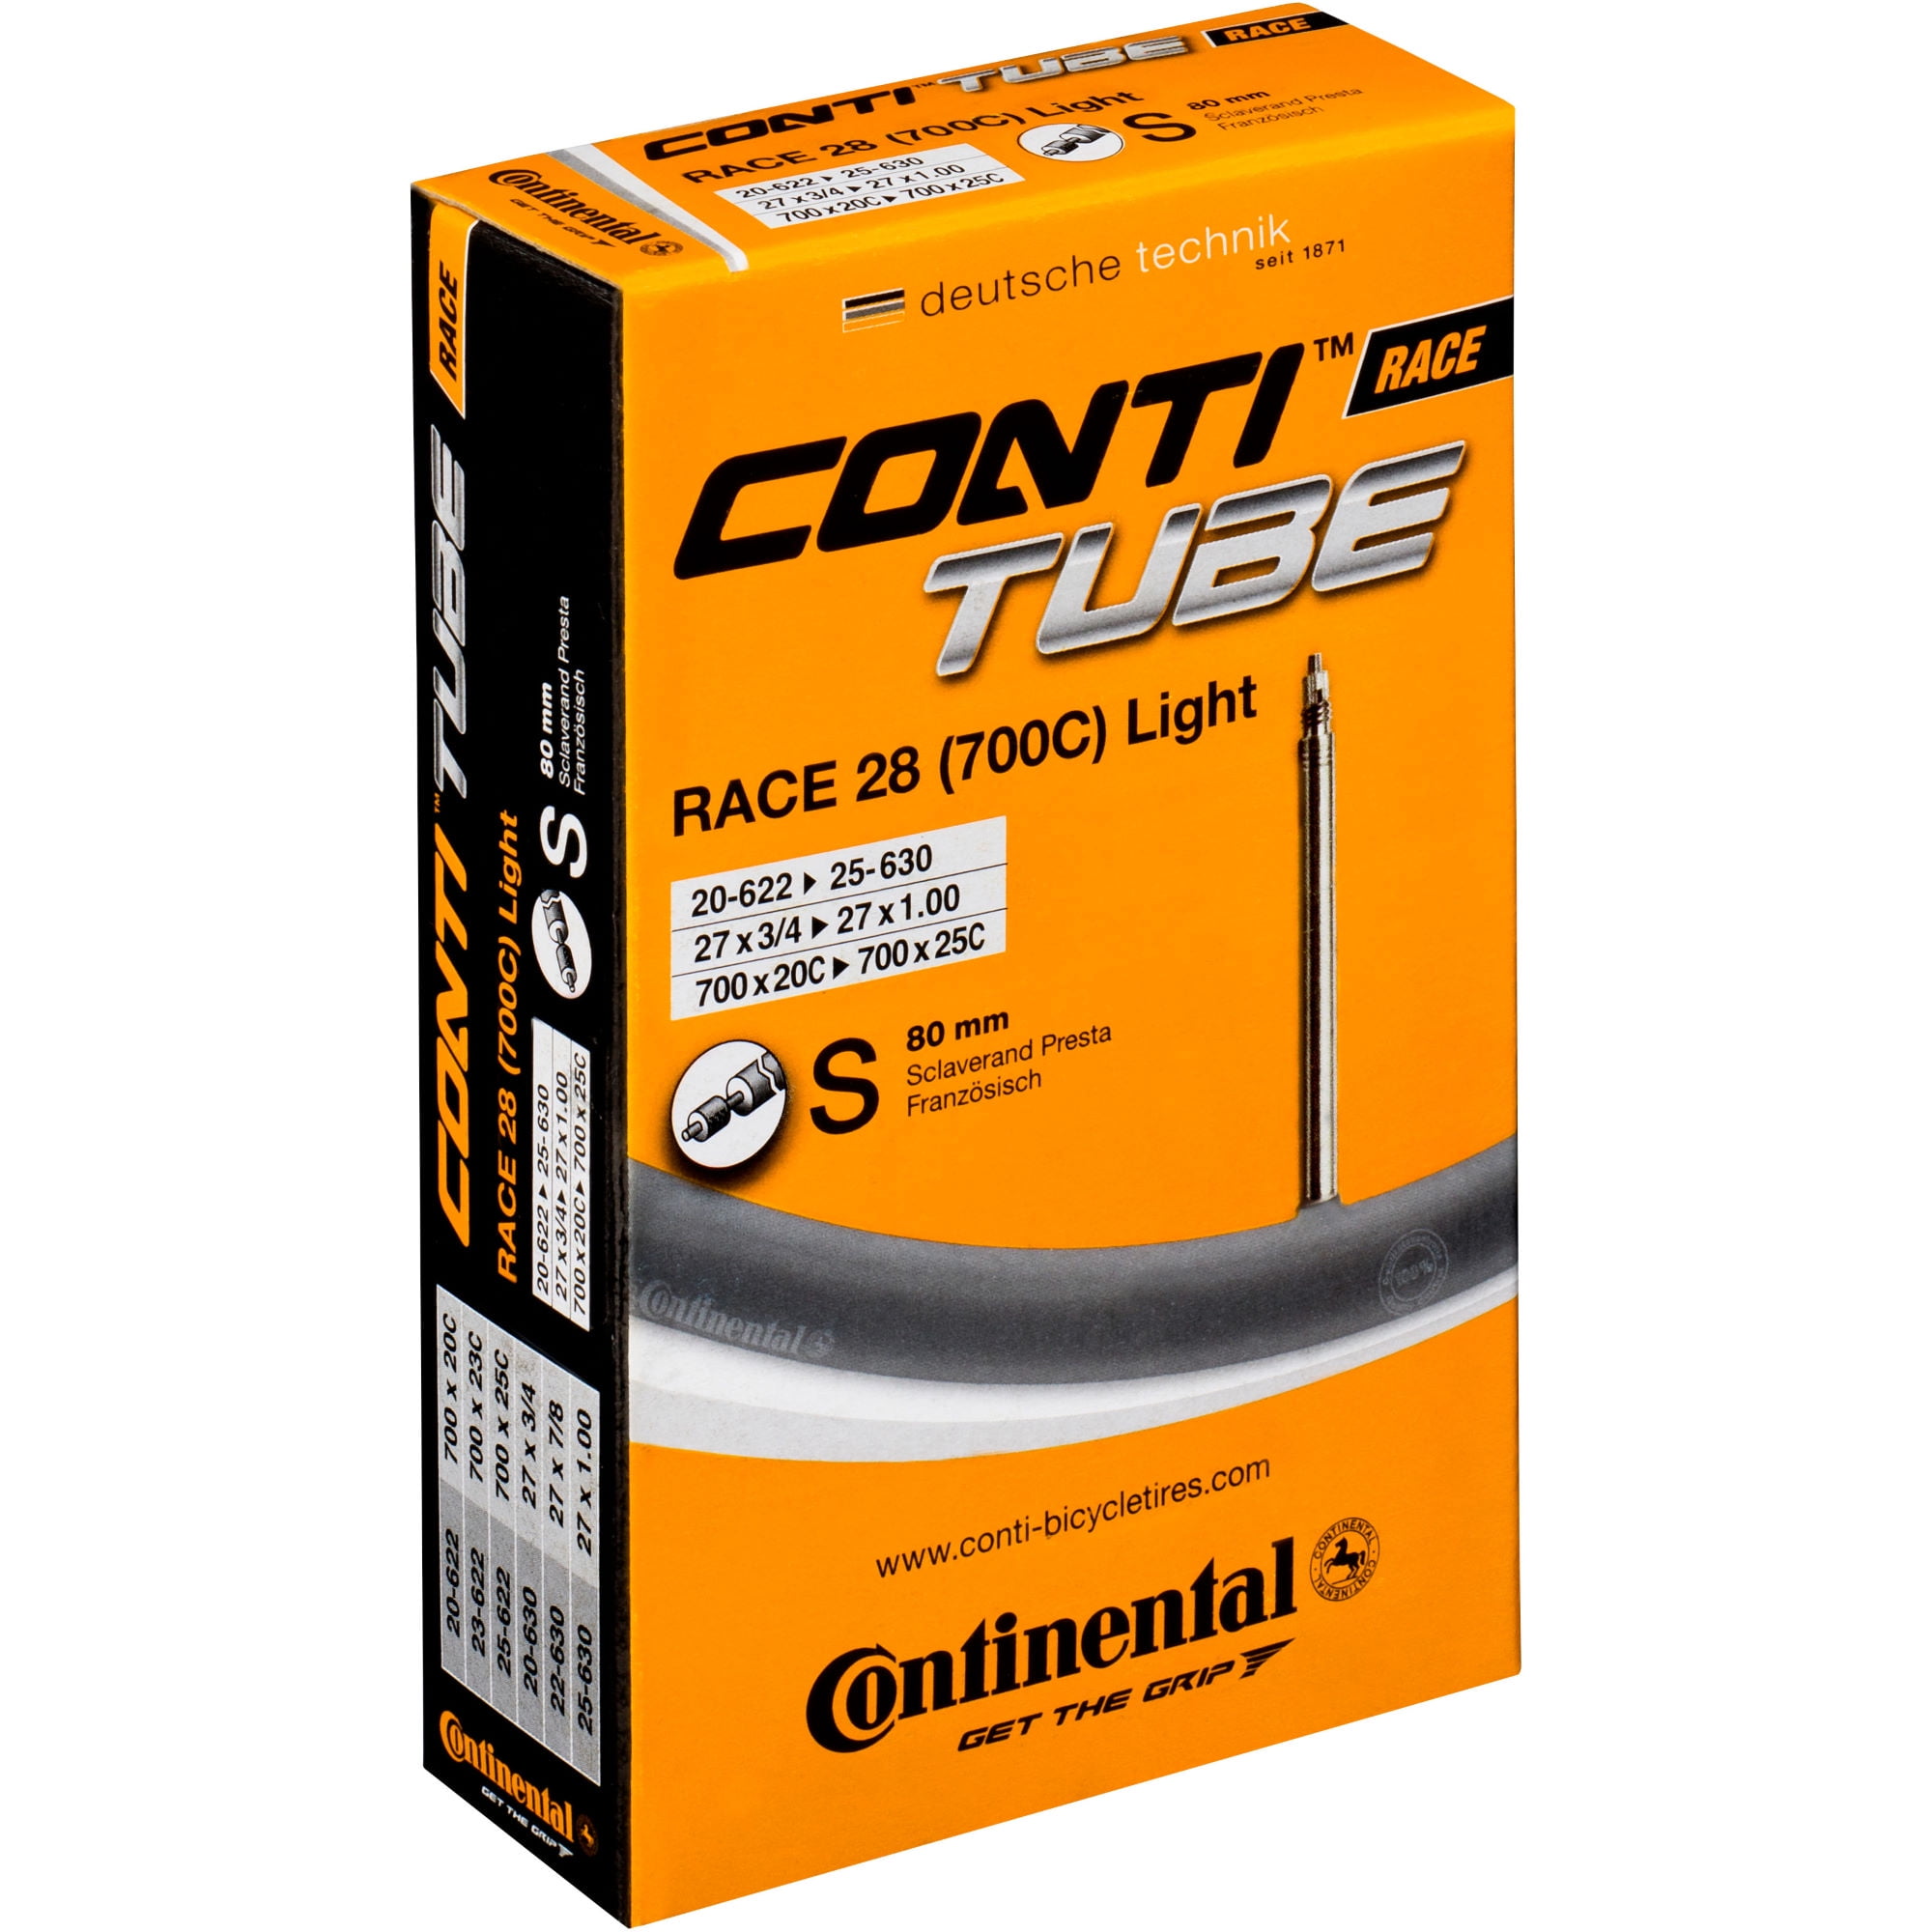 4 x Continental MTB 26 Mountain Bike inner tube Presta Valve 1.75 to 2.5 Unboxed 